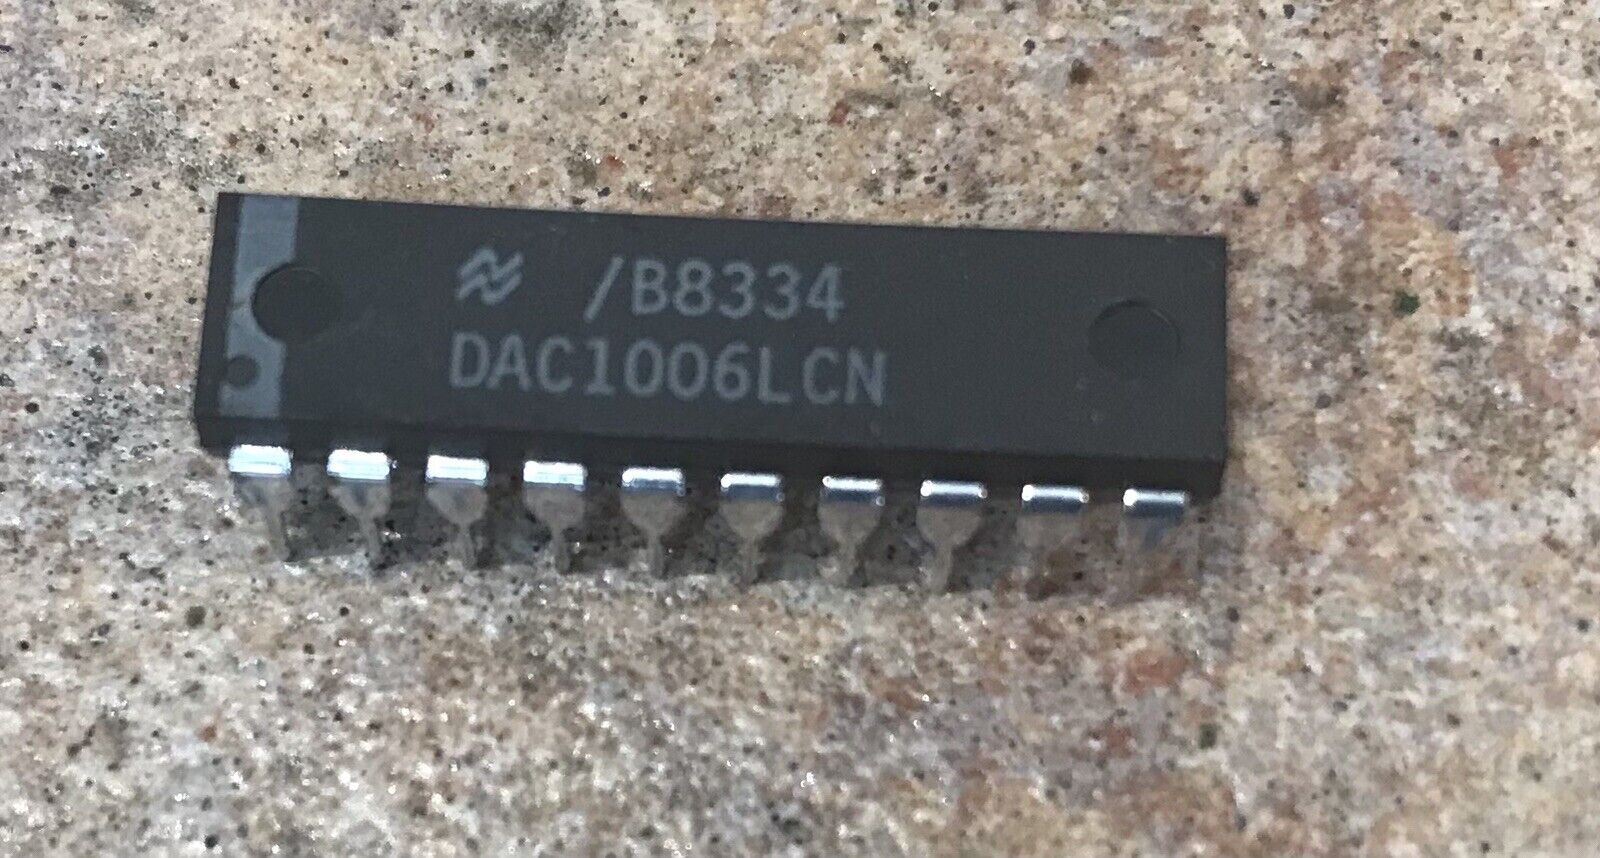 National Semiconductor DAC1006LCN 10-Bit D/A Converter PDIP20 X 1PC